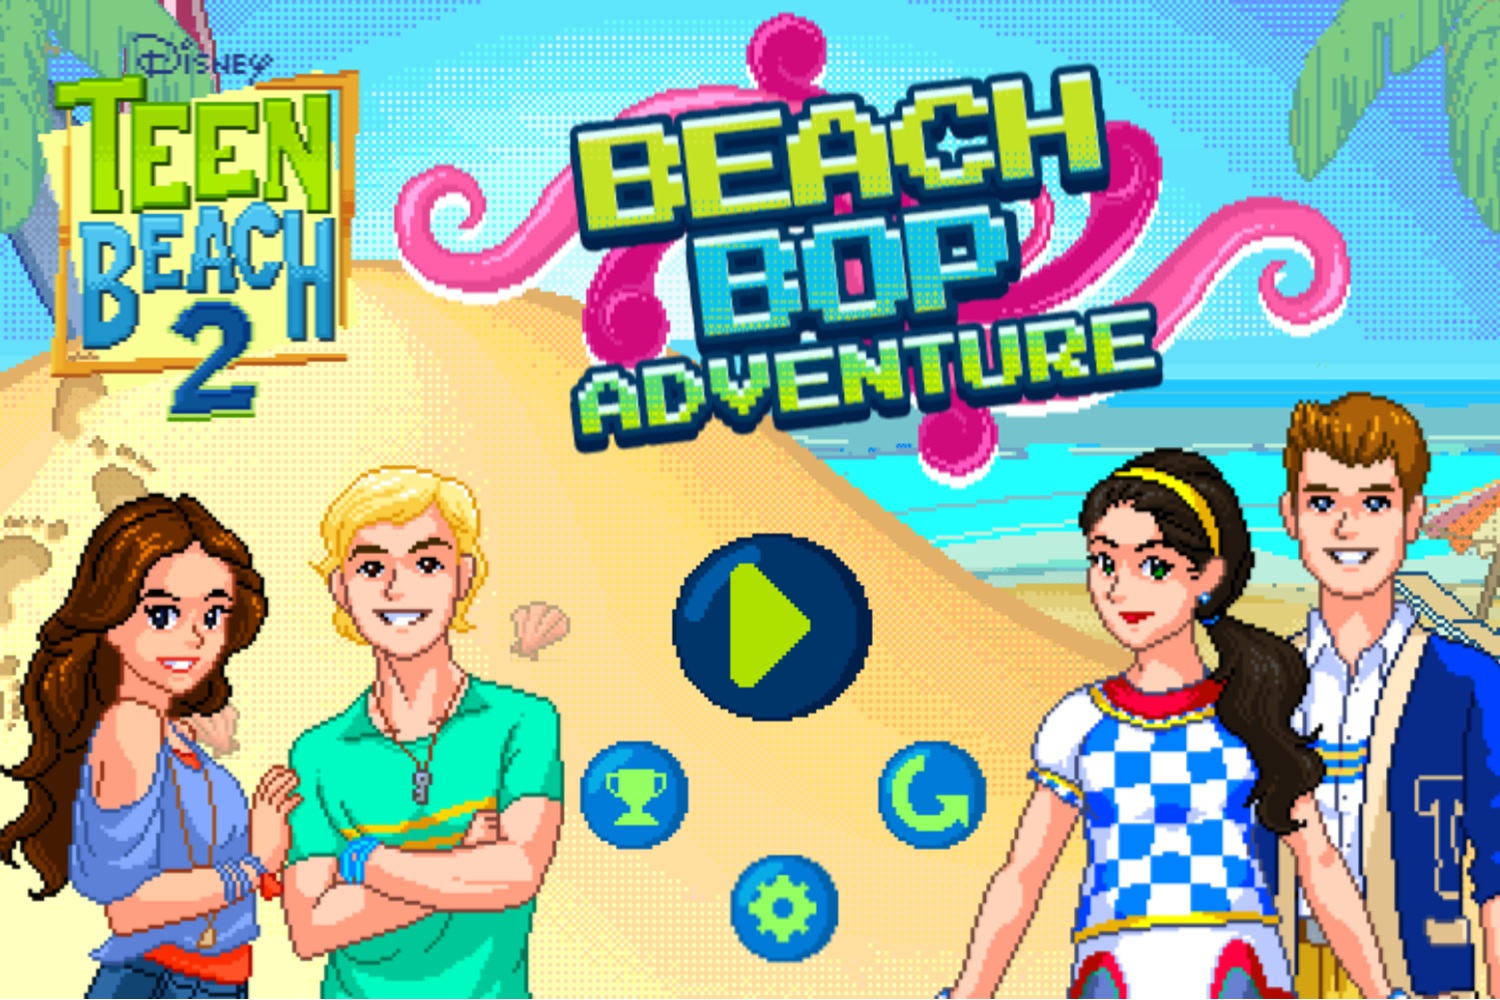 Teen Beach 2 Beach Bop Adventure Game Welcome Screen Screenshot.